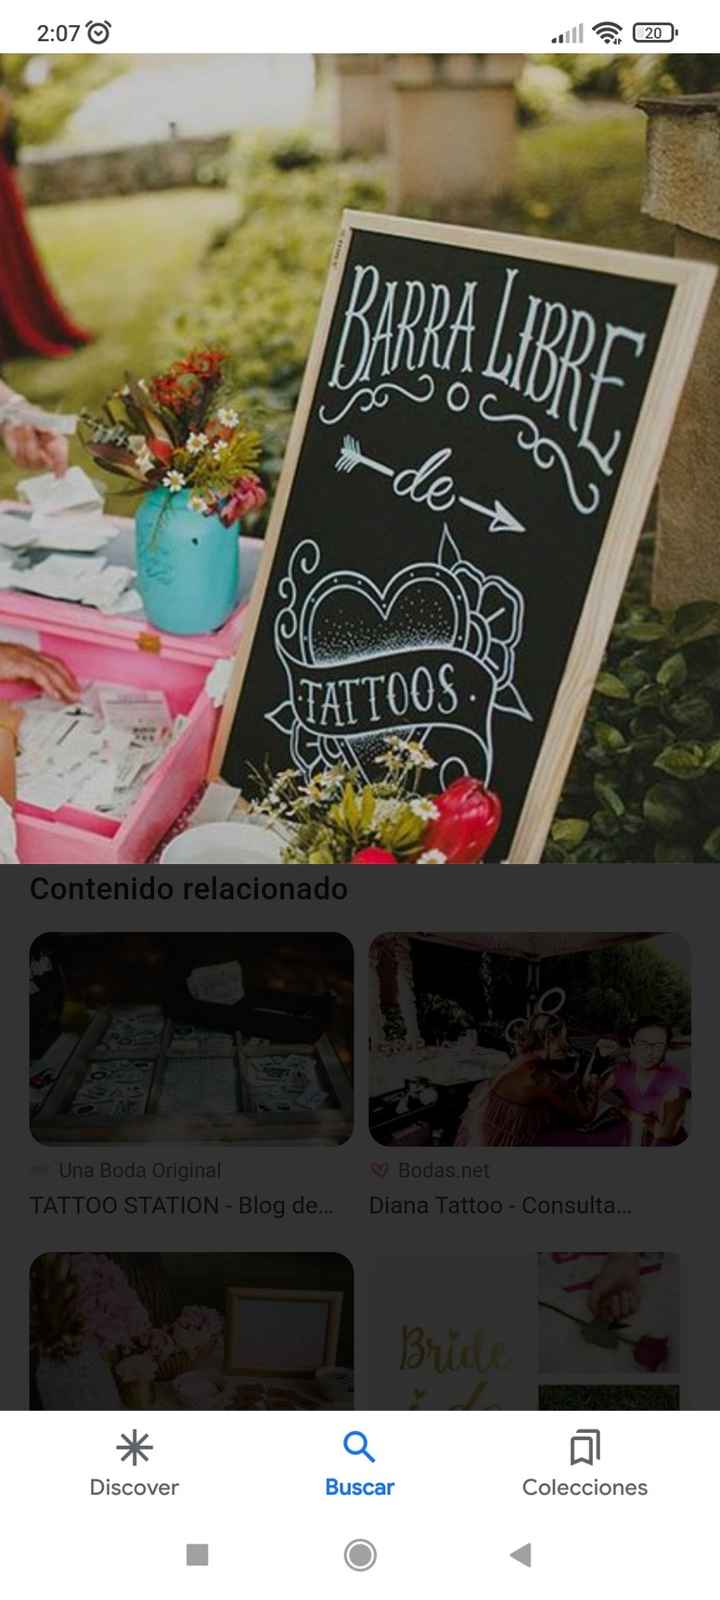 Barra libre tattoos - 1